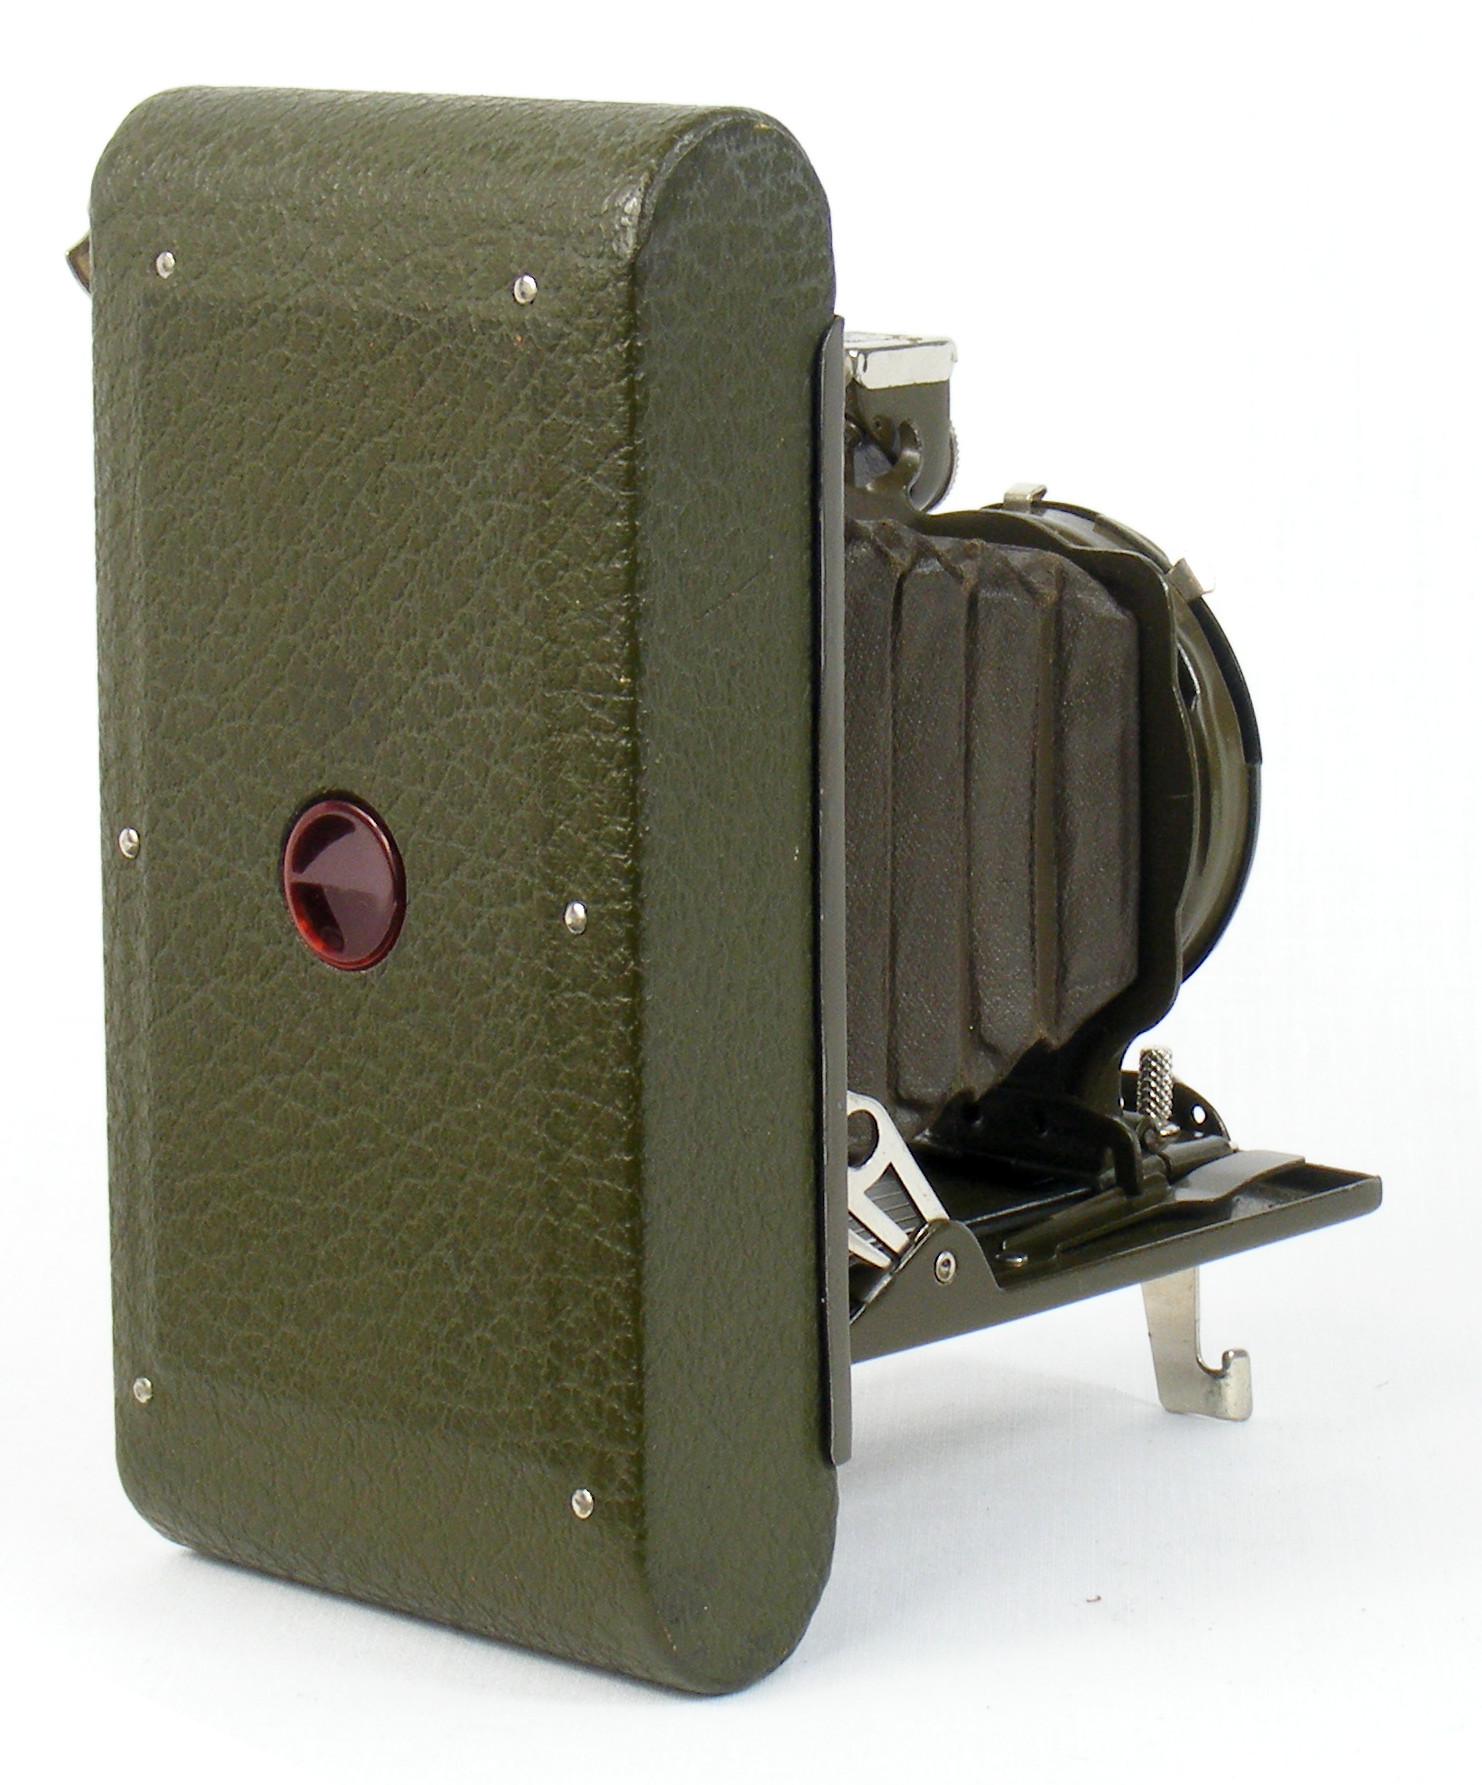 Rear view of Kodak Boy Scout camera